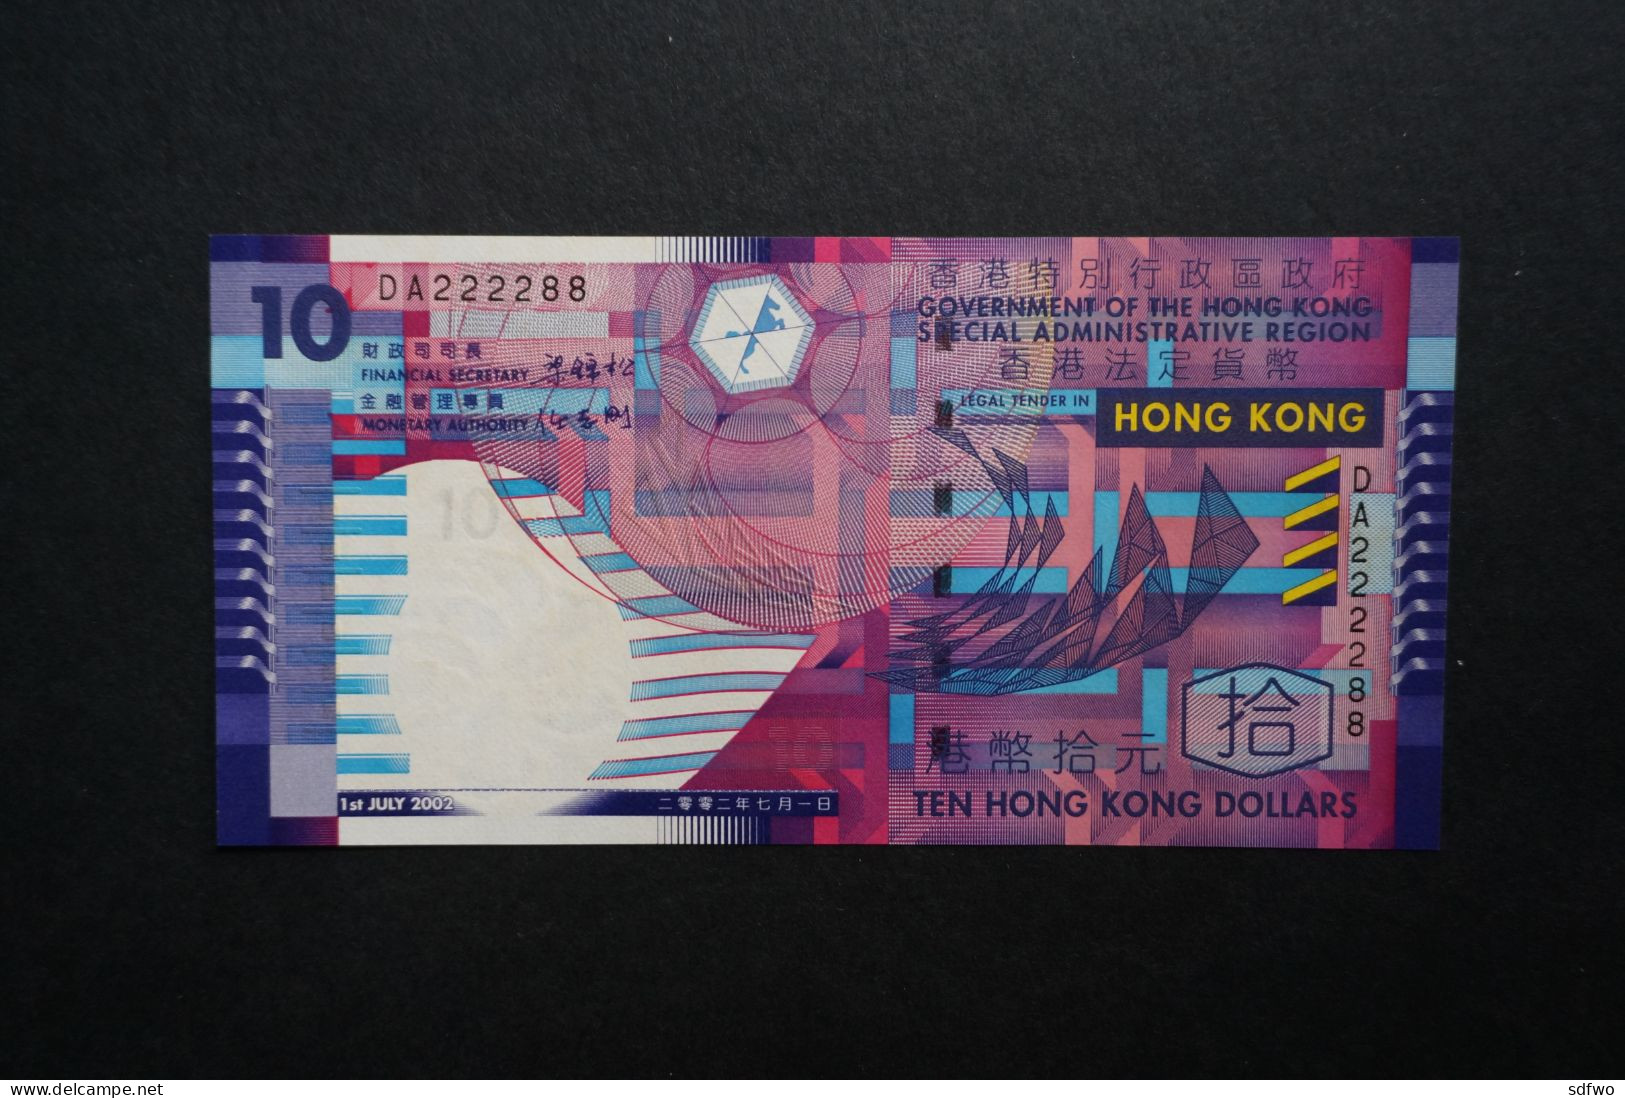 (M) 2002 HONG KONG 10 DOLLARS NOTE - #DA222288 (UNC) - Hong Kong